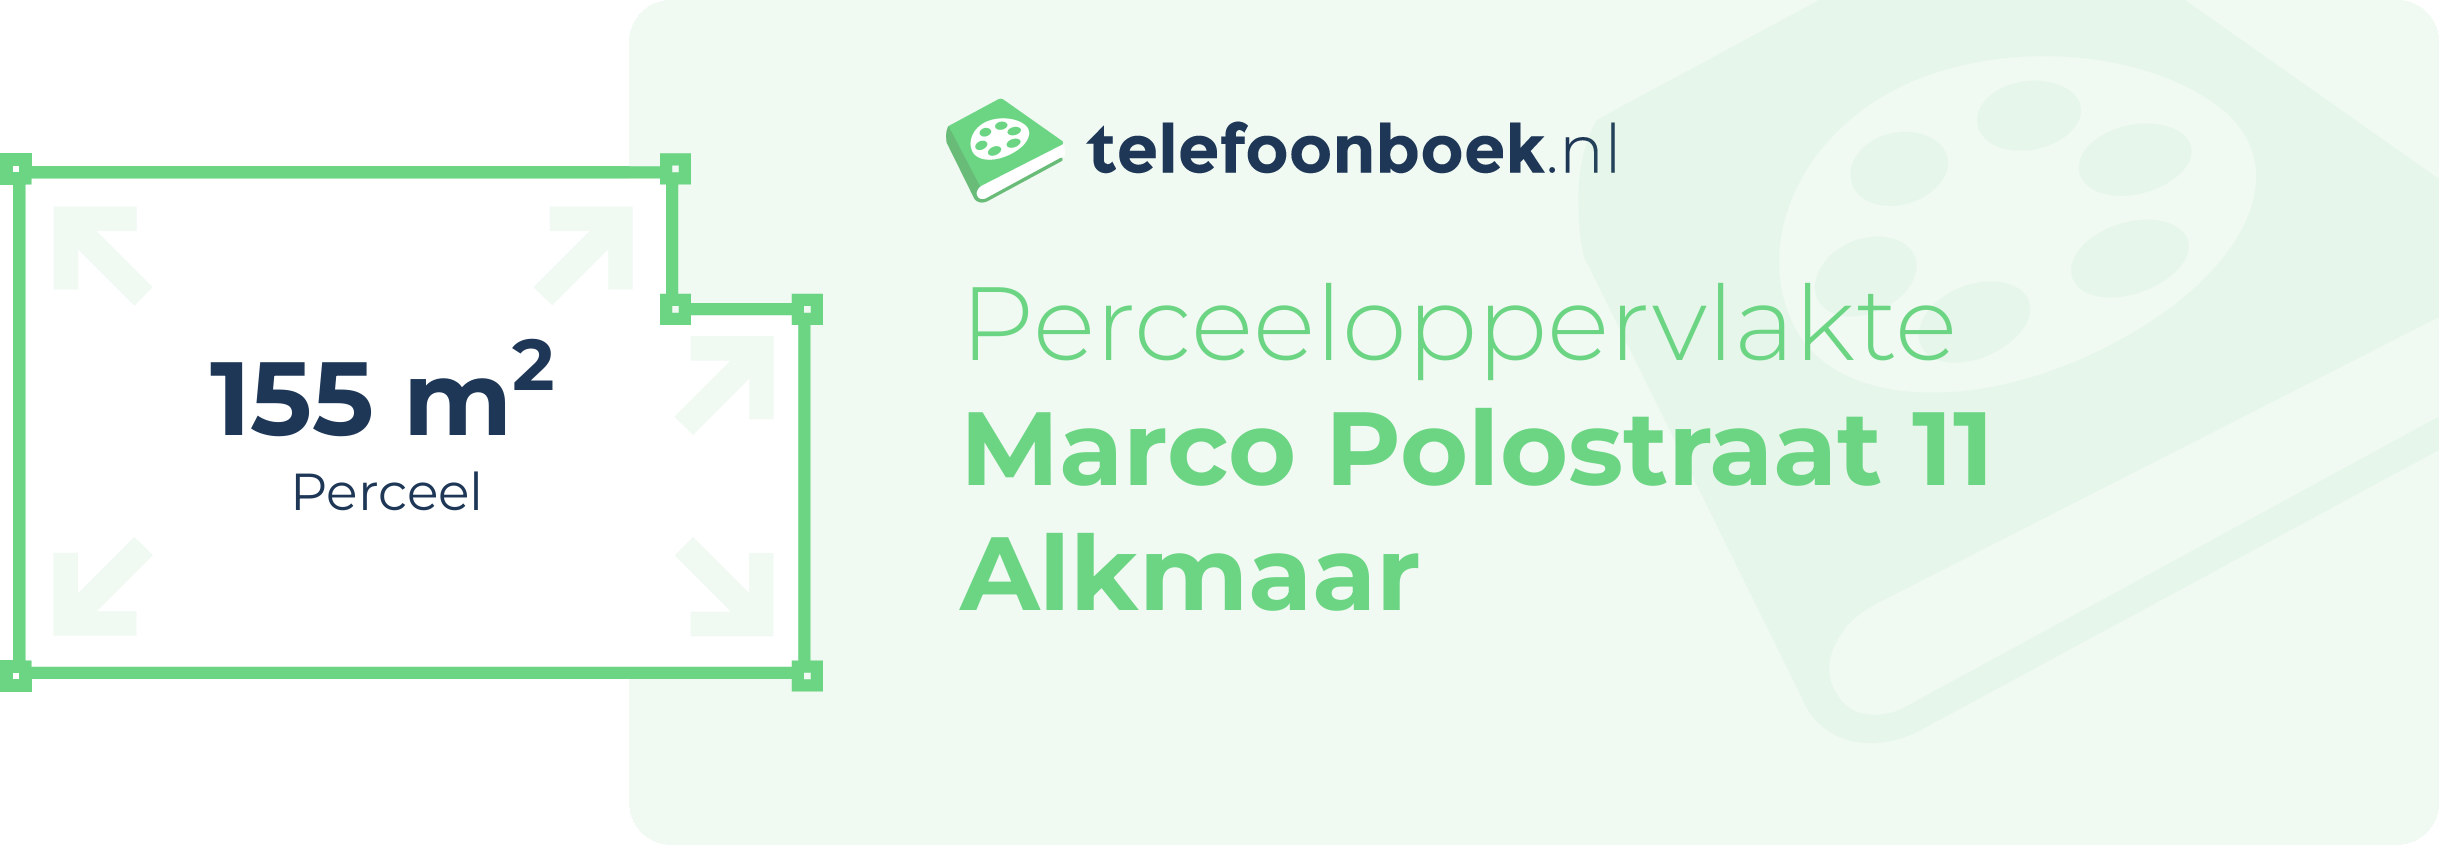 Perceeloppervlakte Marco Polostraat 11 Alkmaar